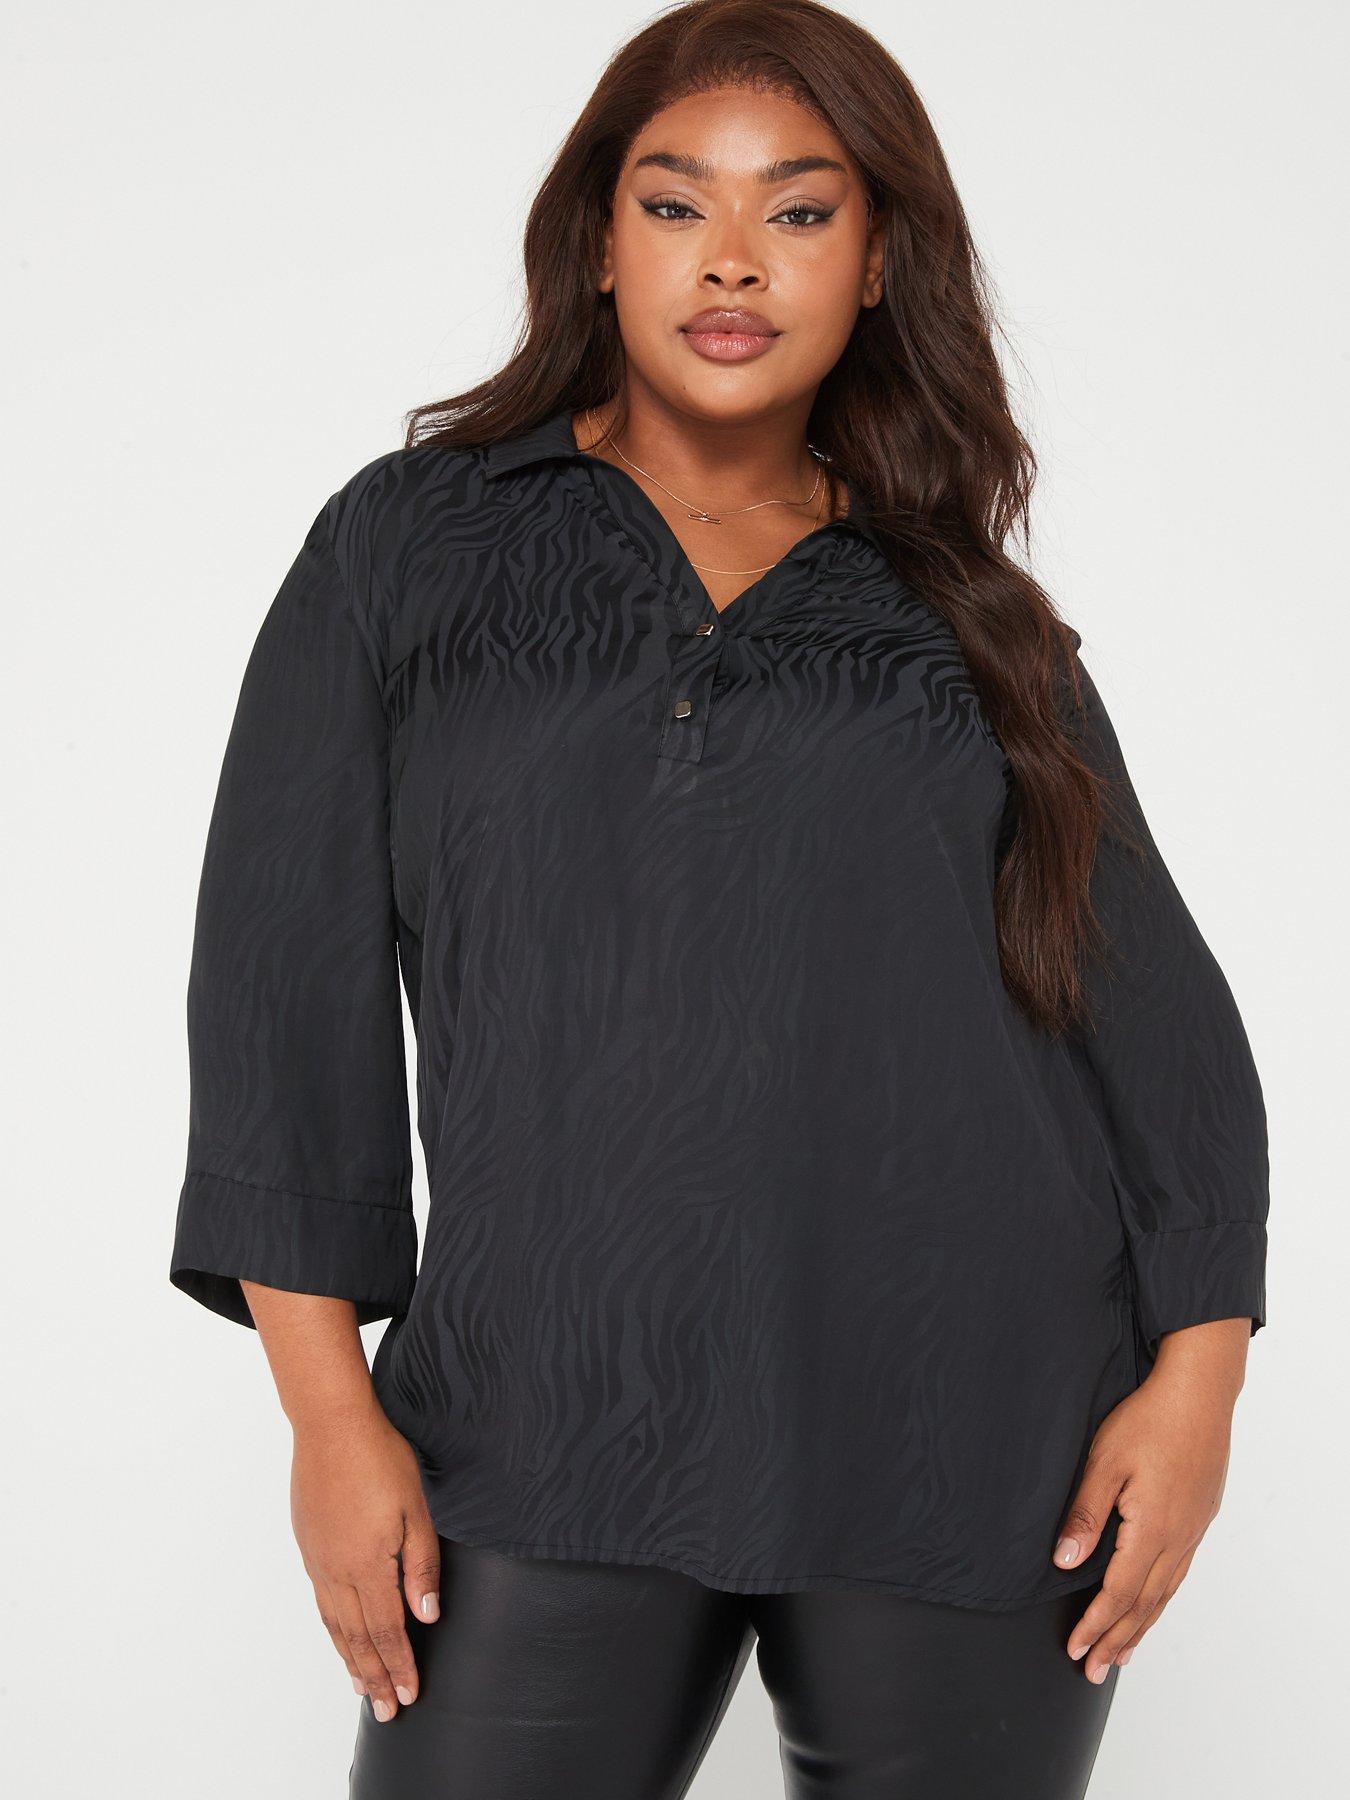 Black, Plus Size, Blouses & shirts, Women